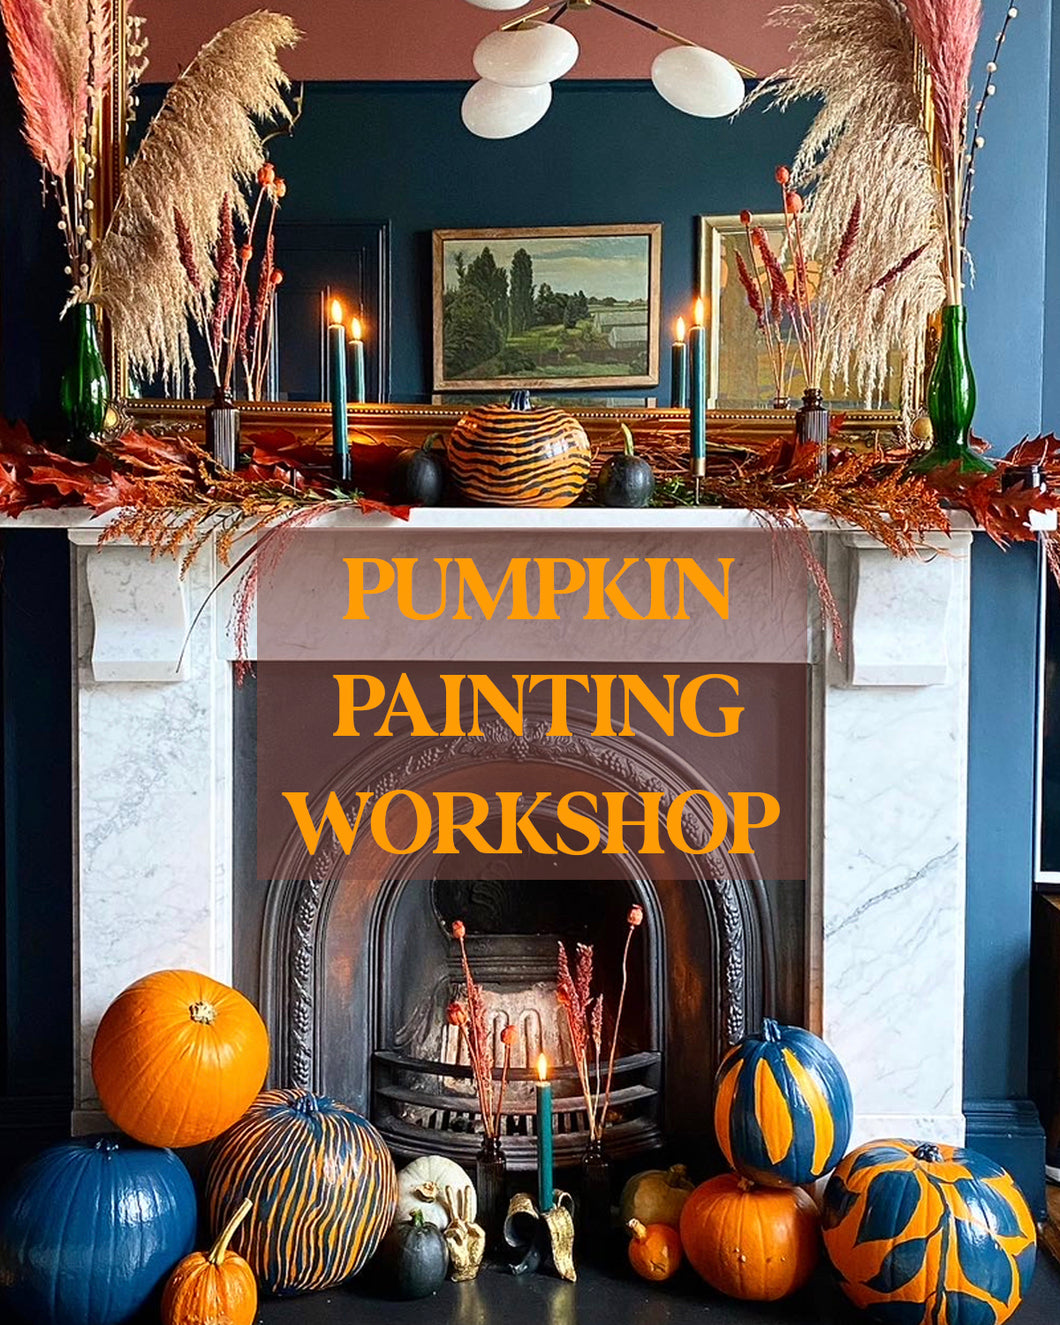 Pumpkin Painting Workshop - Wednesday 18th October